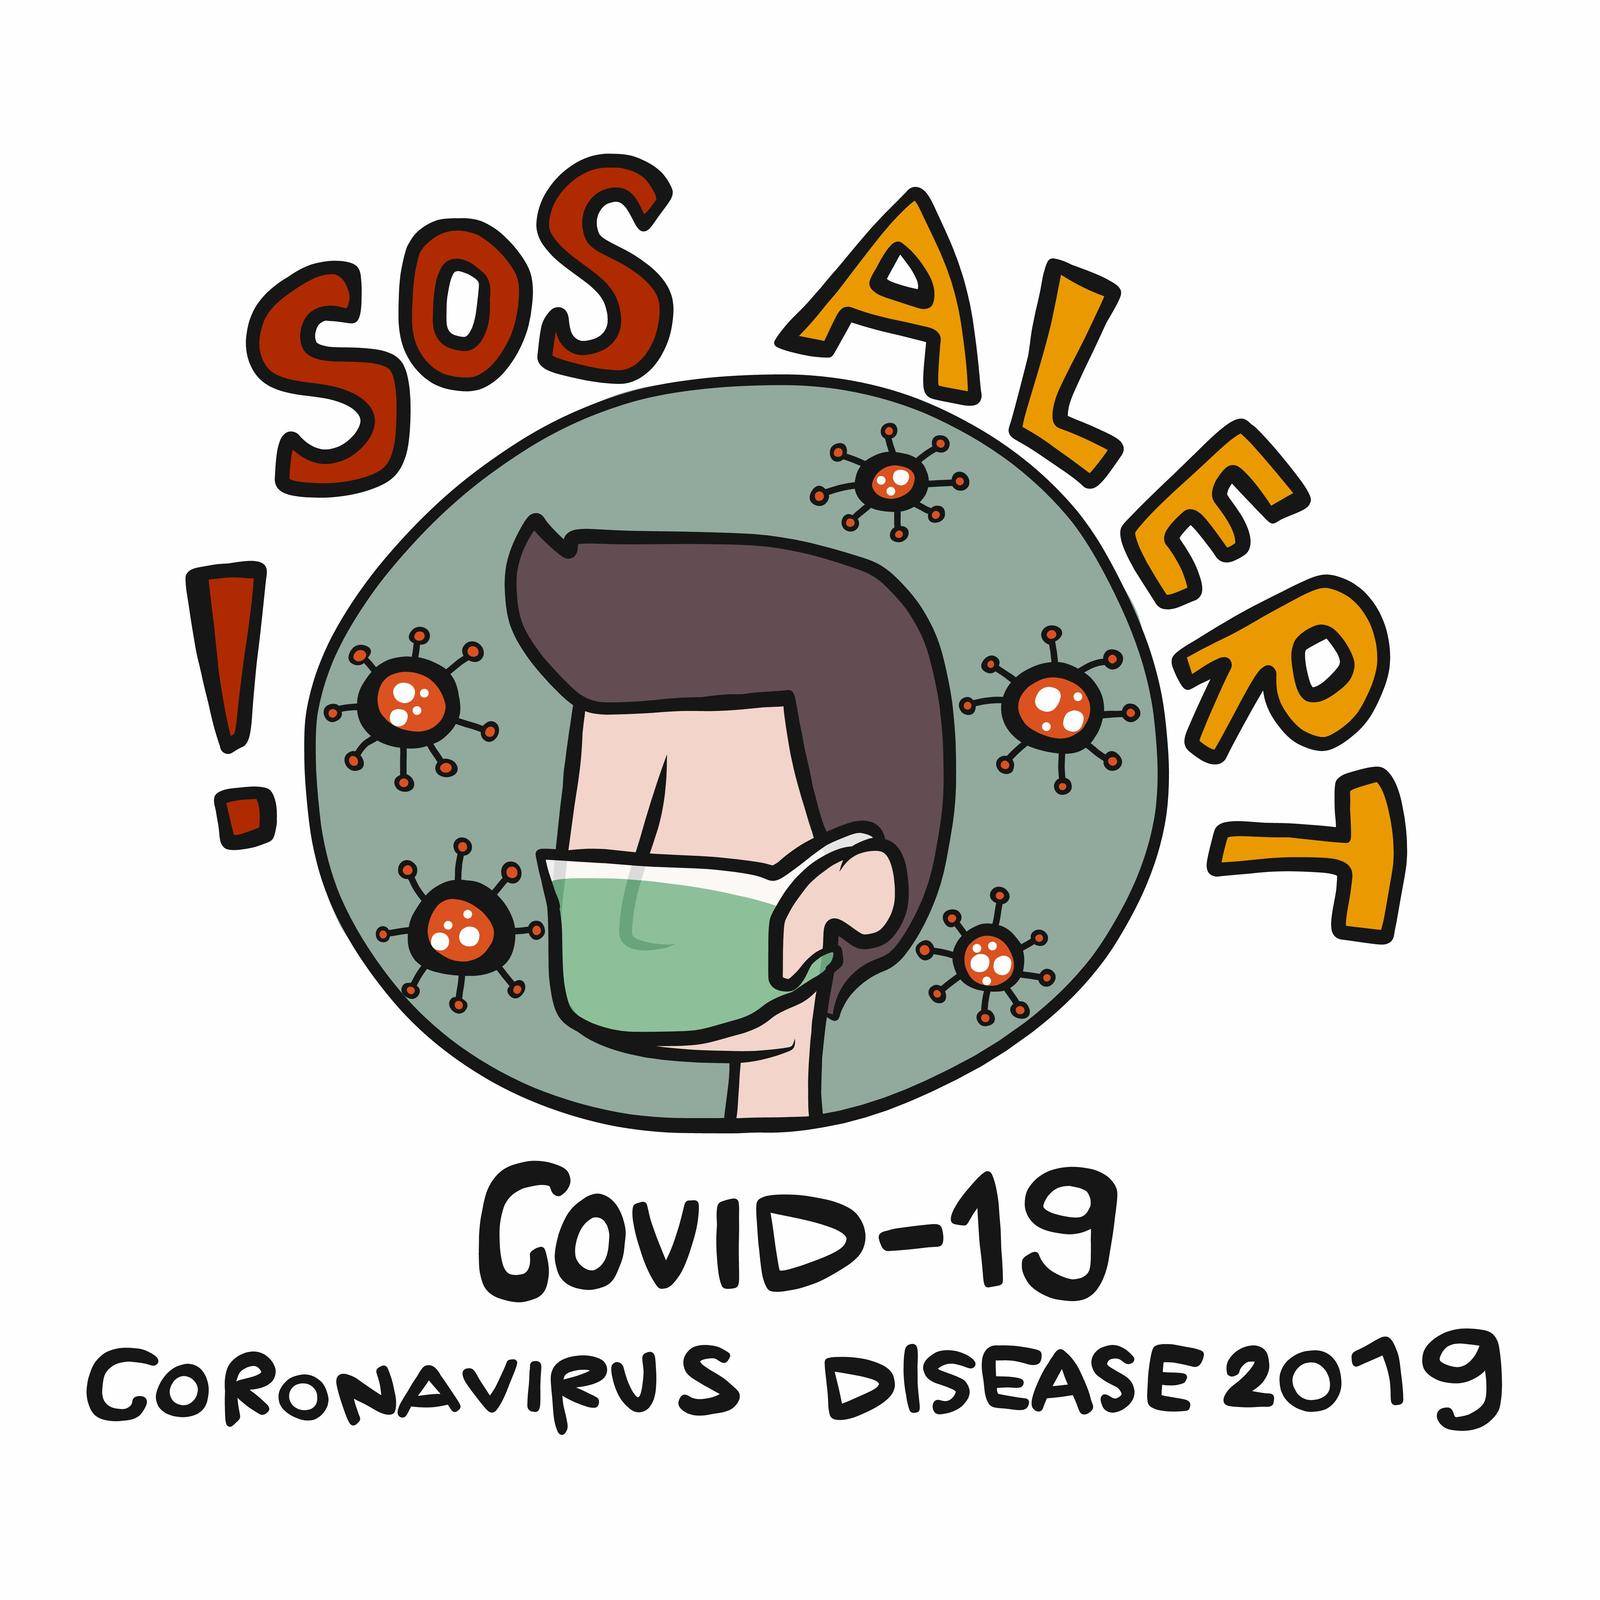 Covid-19 Coronavirus disease 2019 SOS alert with man wear hygienic mask logo cartoon vector illustration by Yoopho